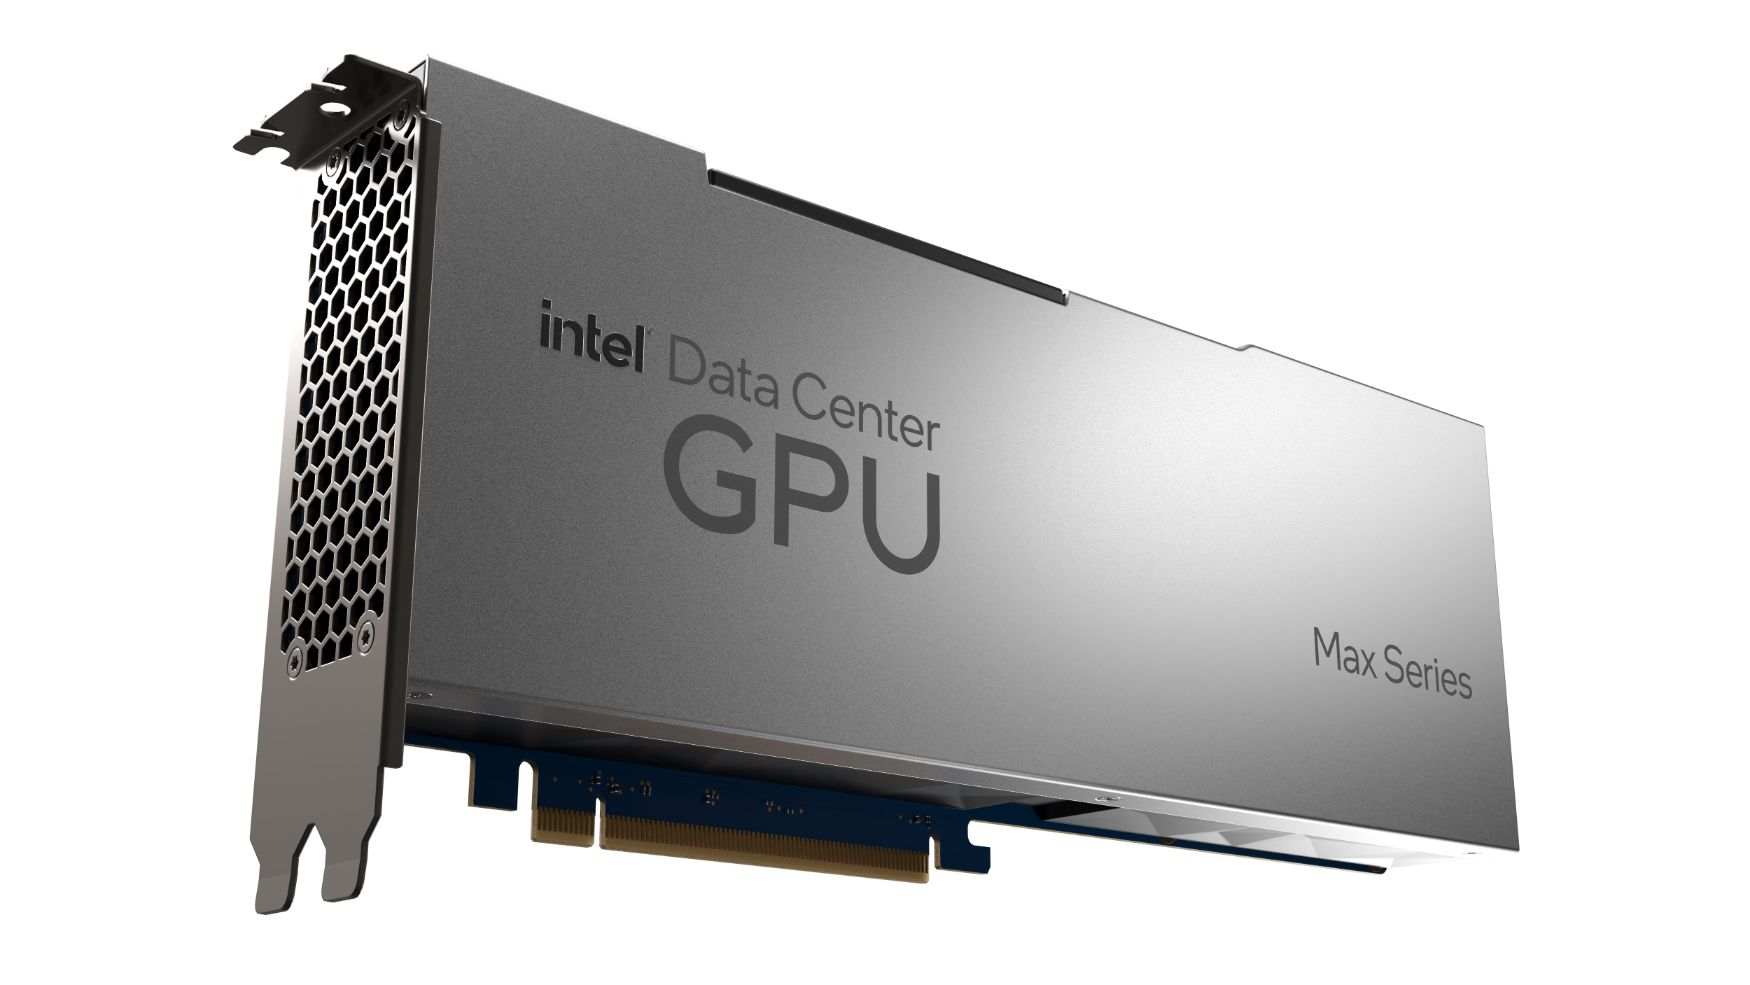 Intel Data Center Gpu Max Series Pcie 3